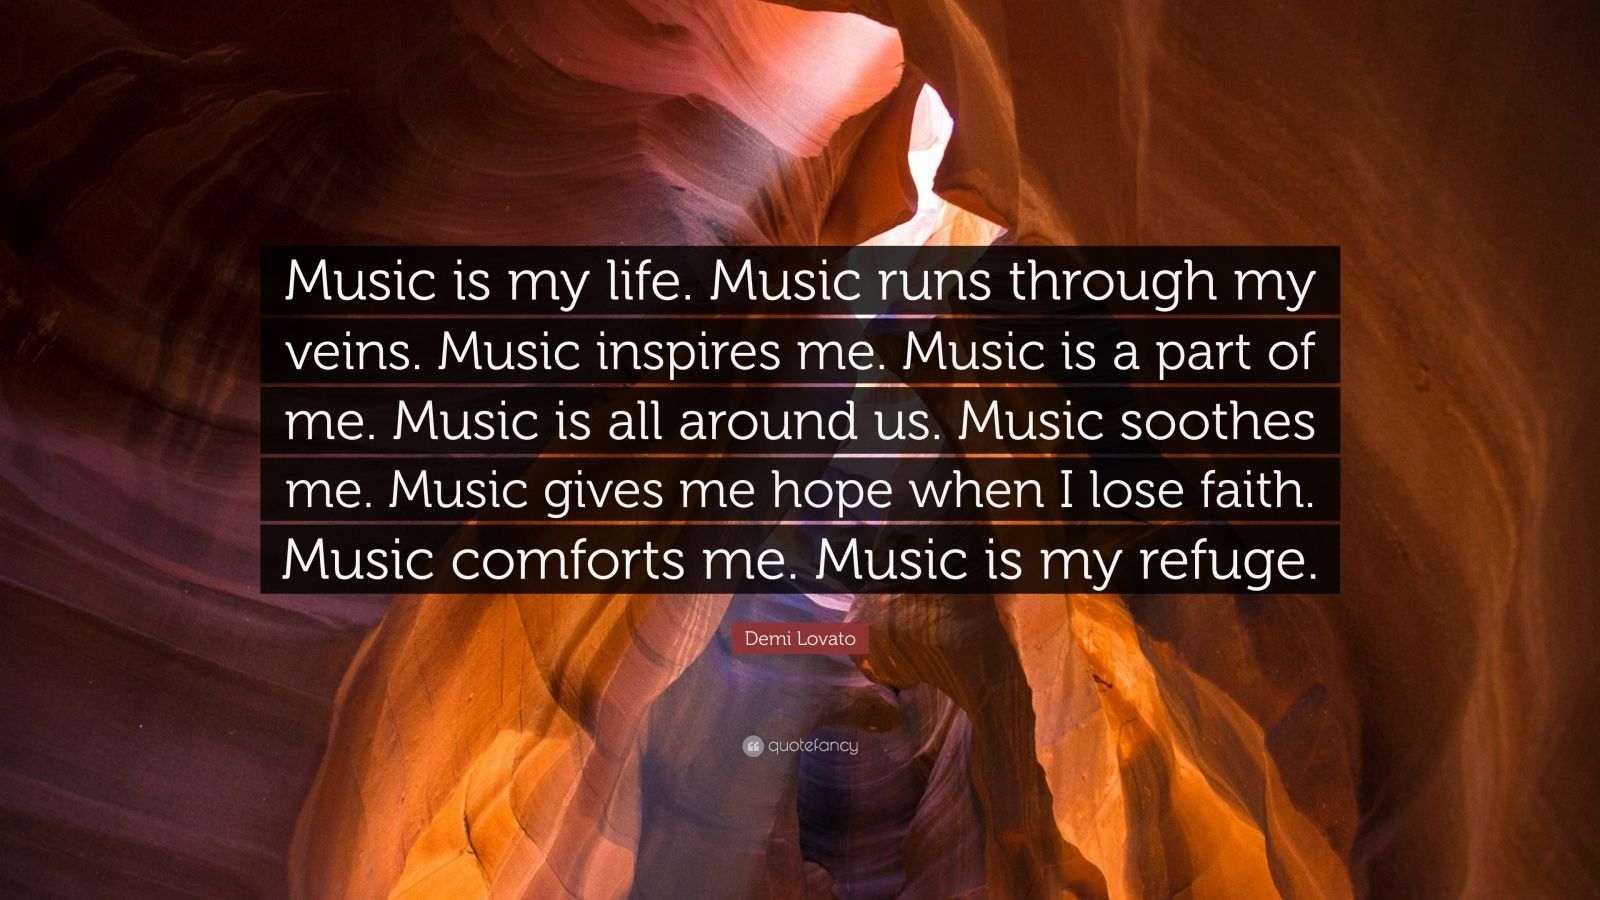 Demi Lovato Quote: "Music is my life. Music runs through ...